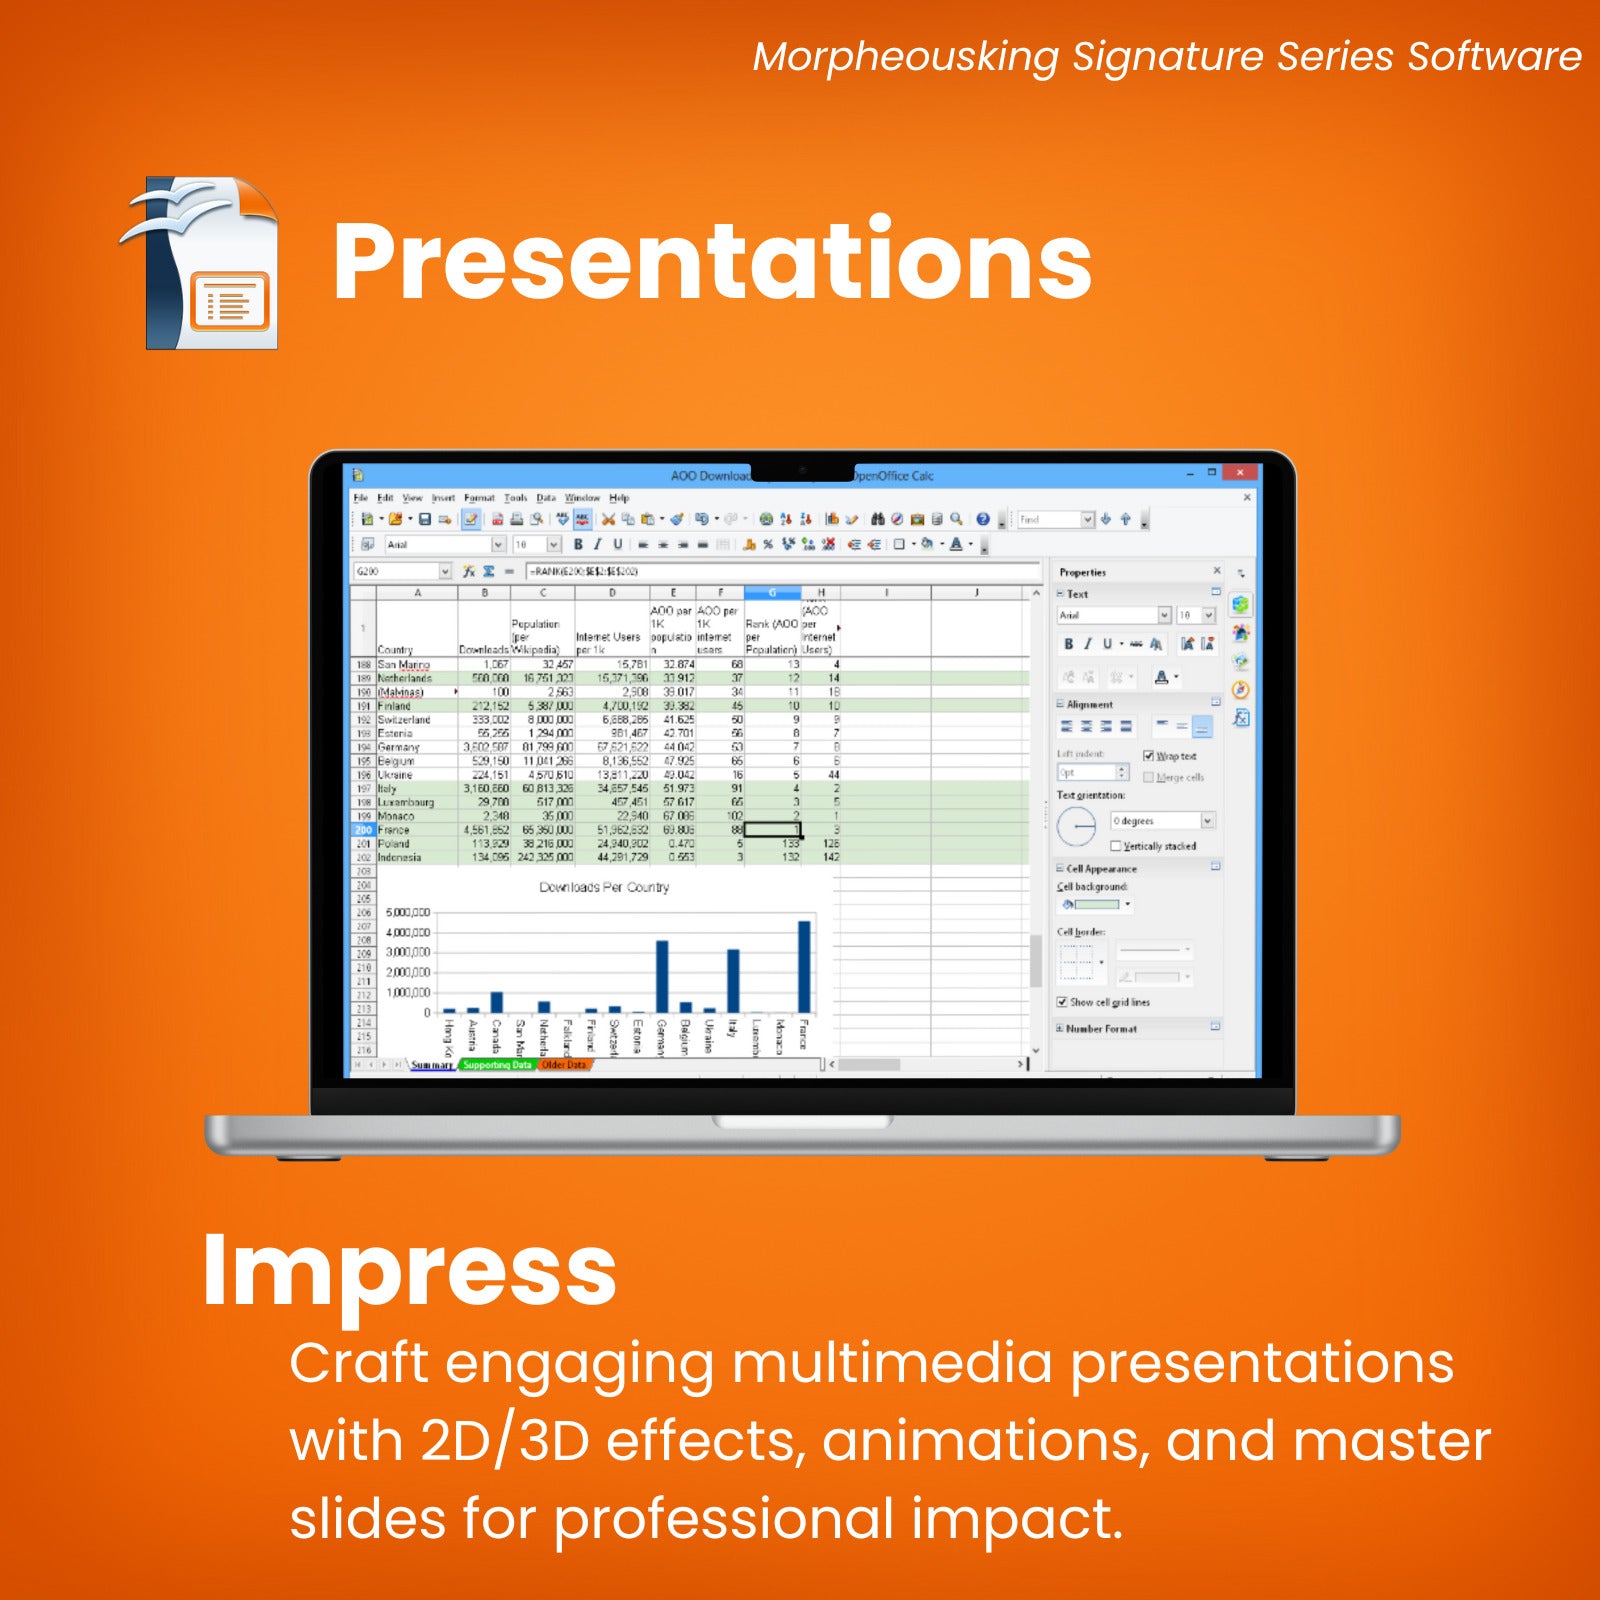 Apache Open Office Impress Screenshot - Open Office Multi-Media Presentation Program